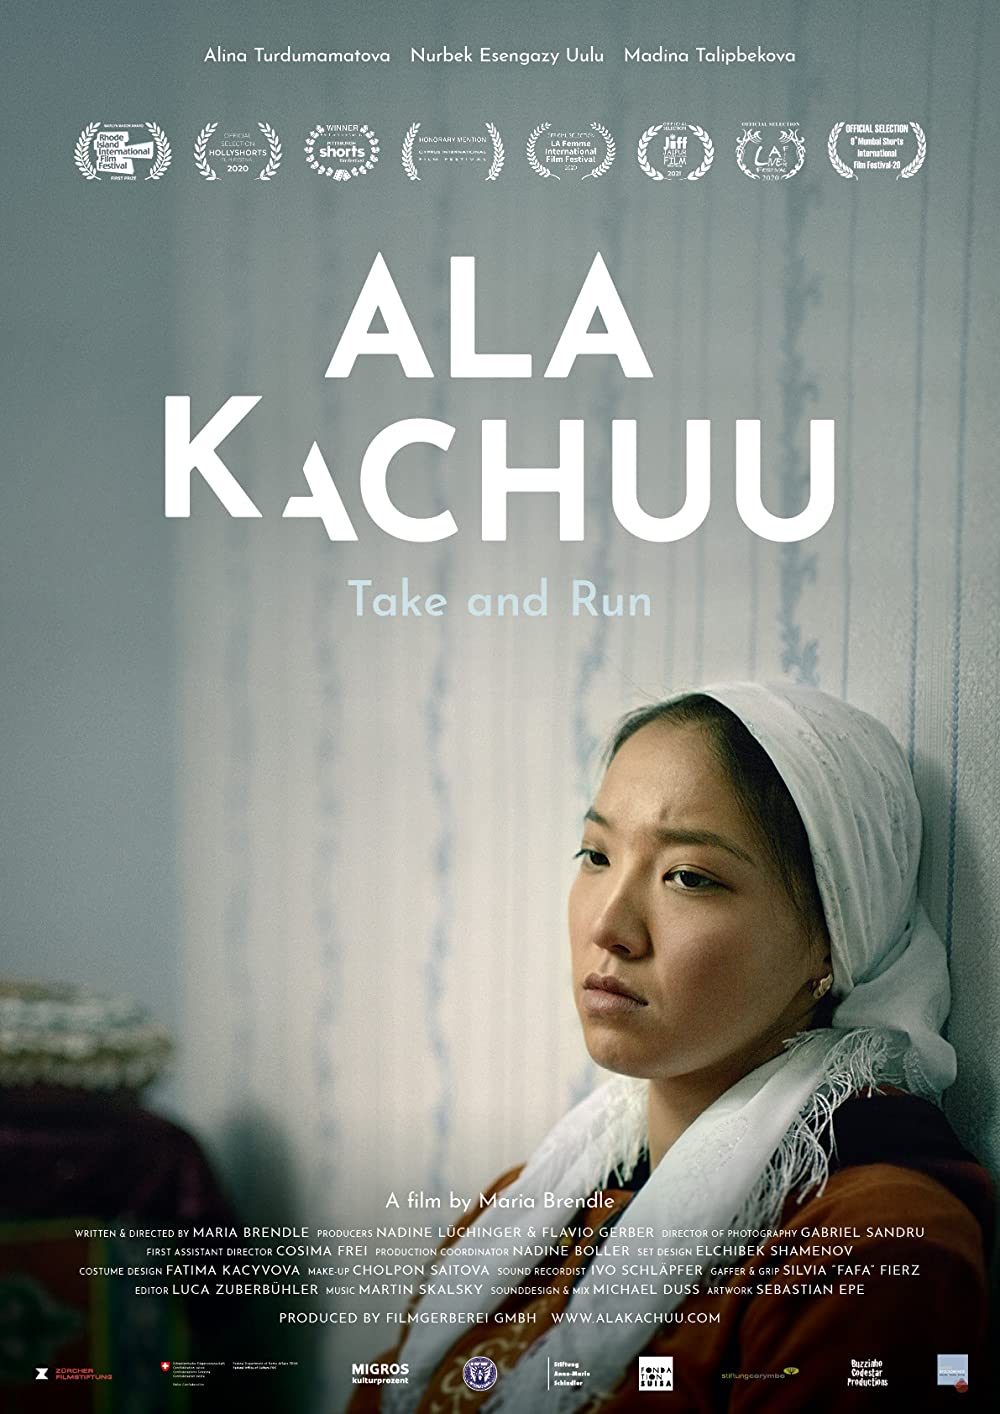 Filmbeschreibung zu Ala Kachuu - Take and Run